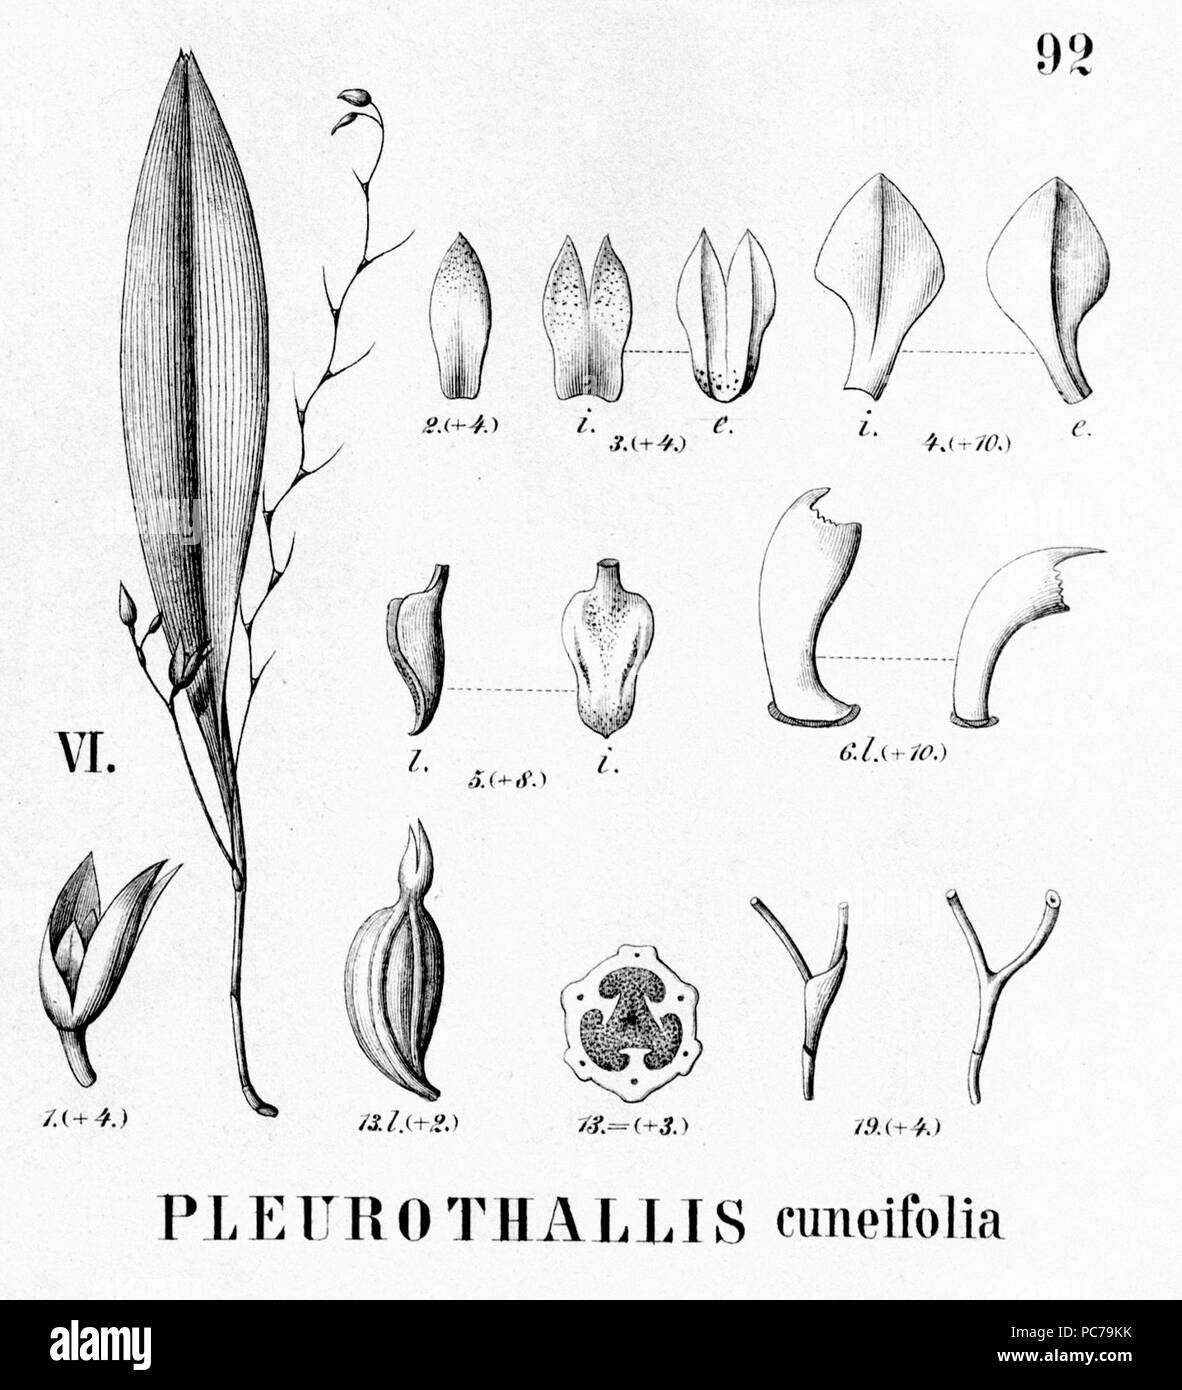 489 Pleurothallis cuneifolia - cutout from Flora Brasiliensis 3-4-92 fig VI Stock Photo